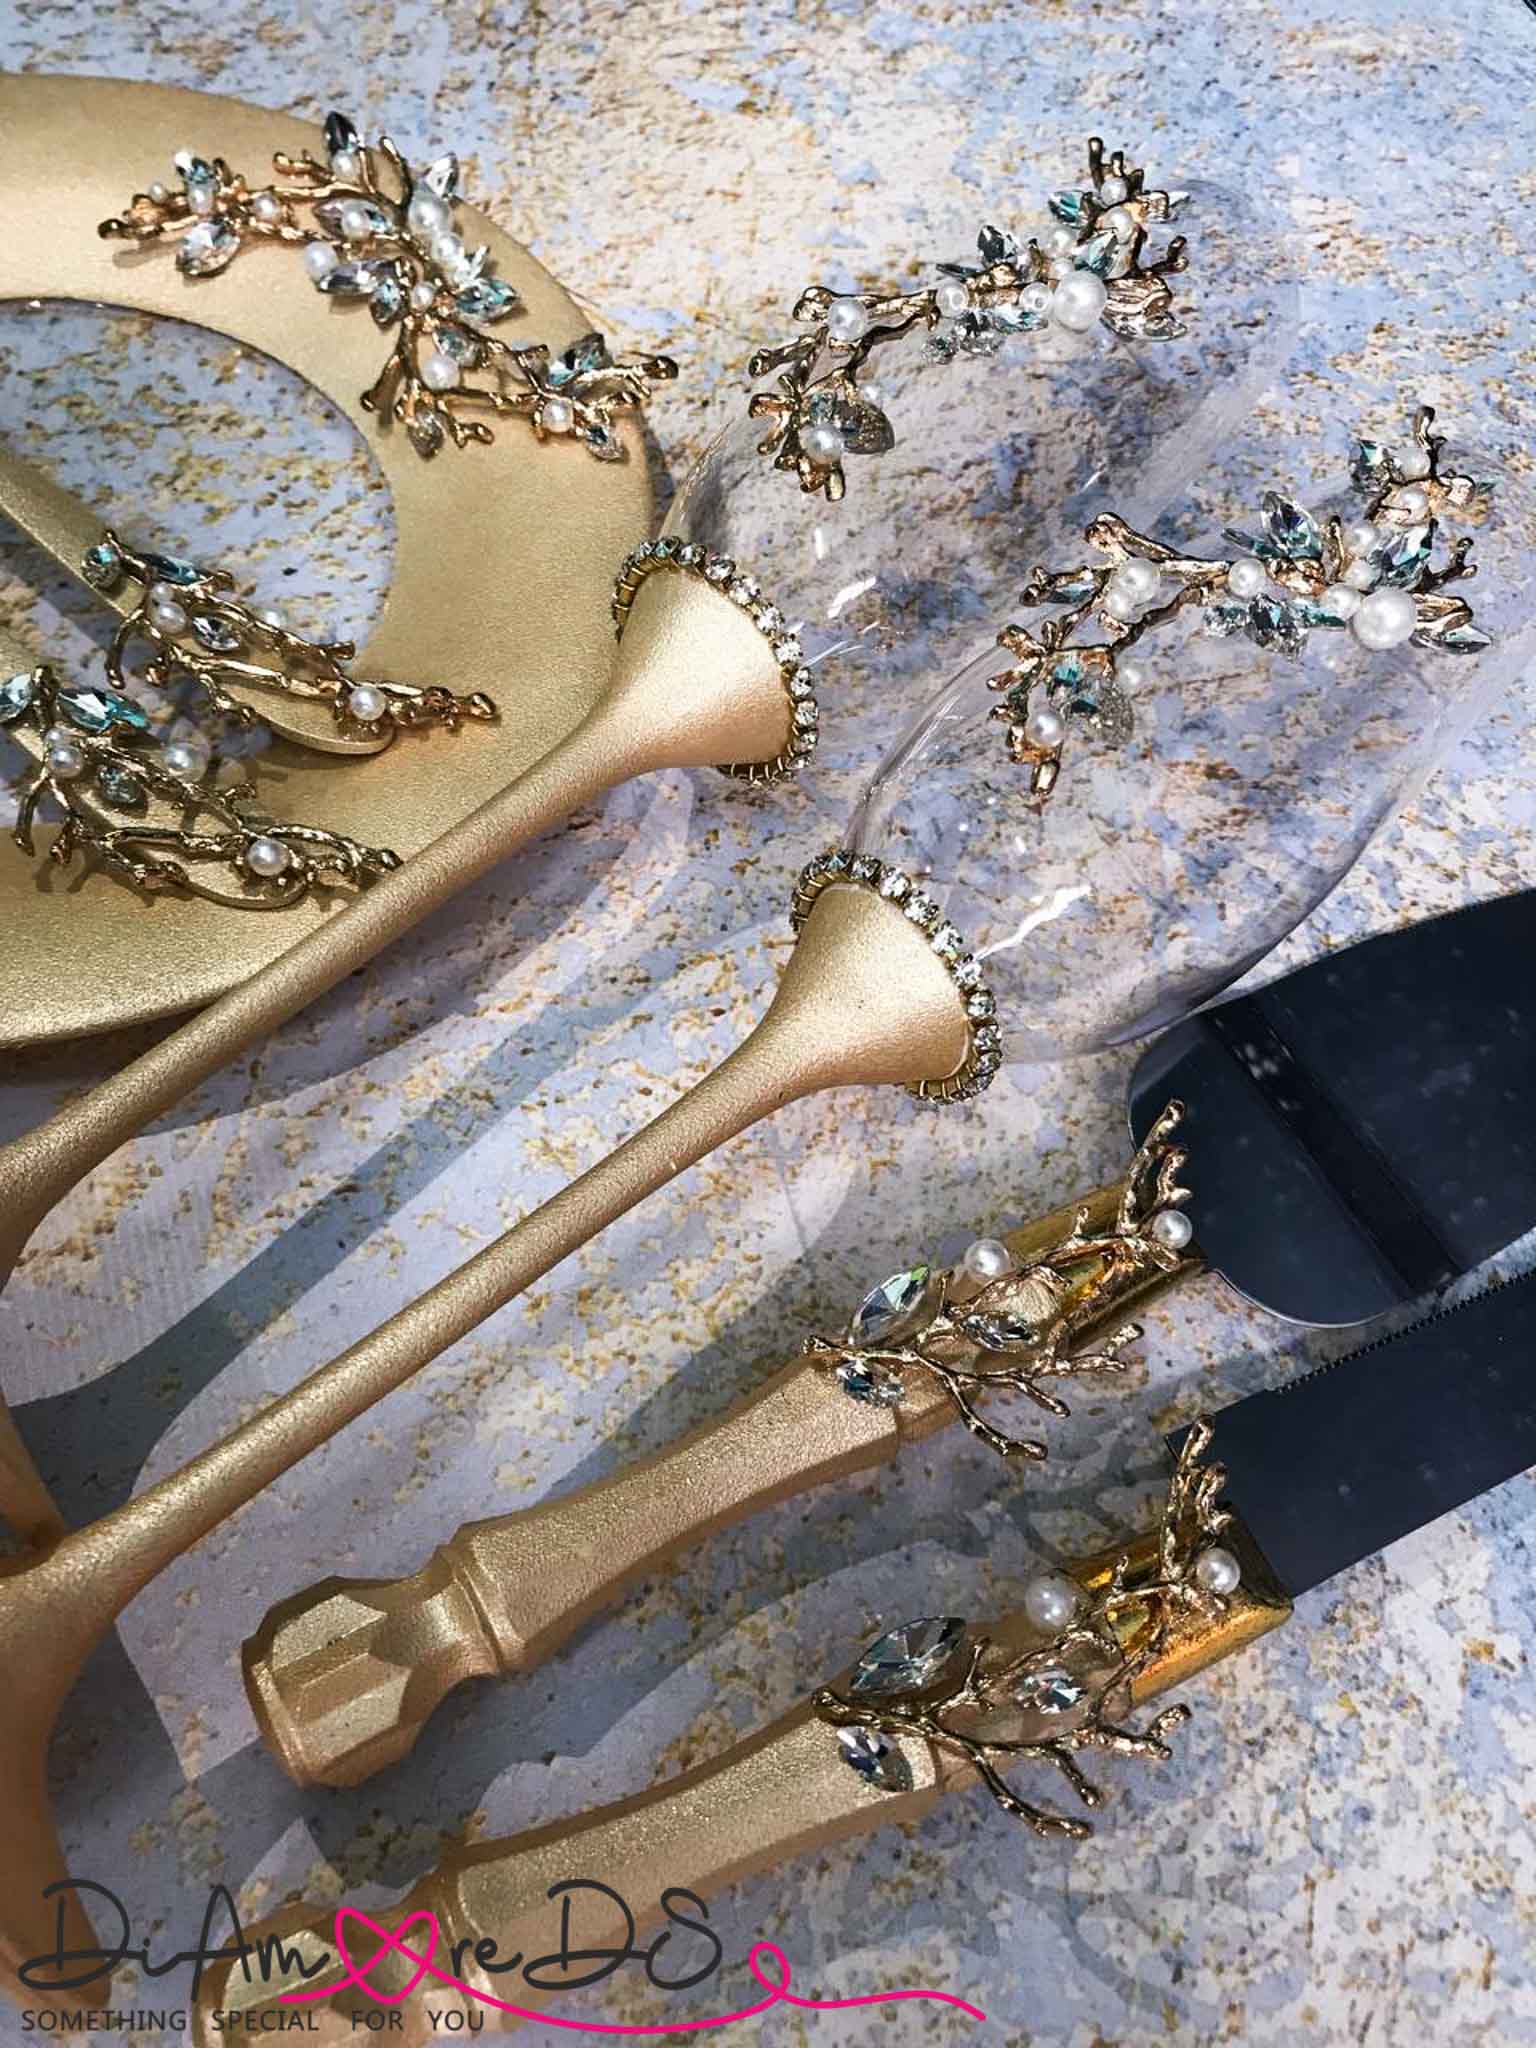 Fiora Gold wedding glasses by DiAmoreDS: a keepsake to cherish